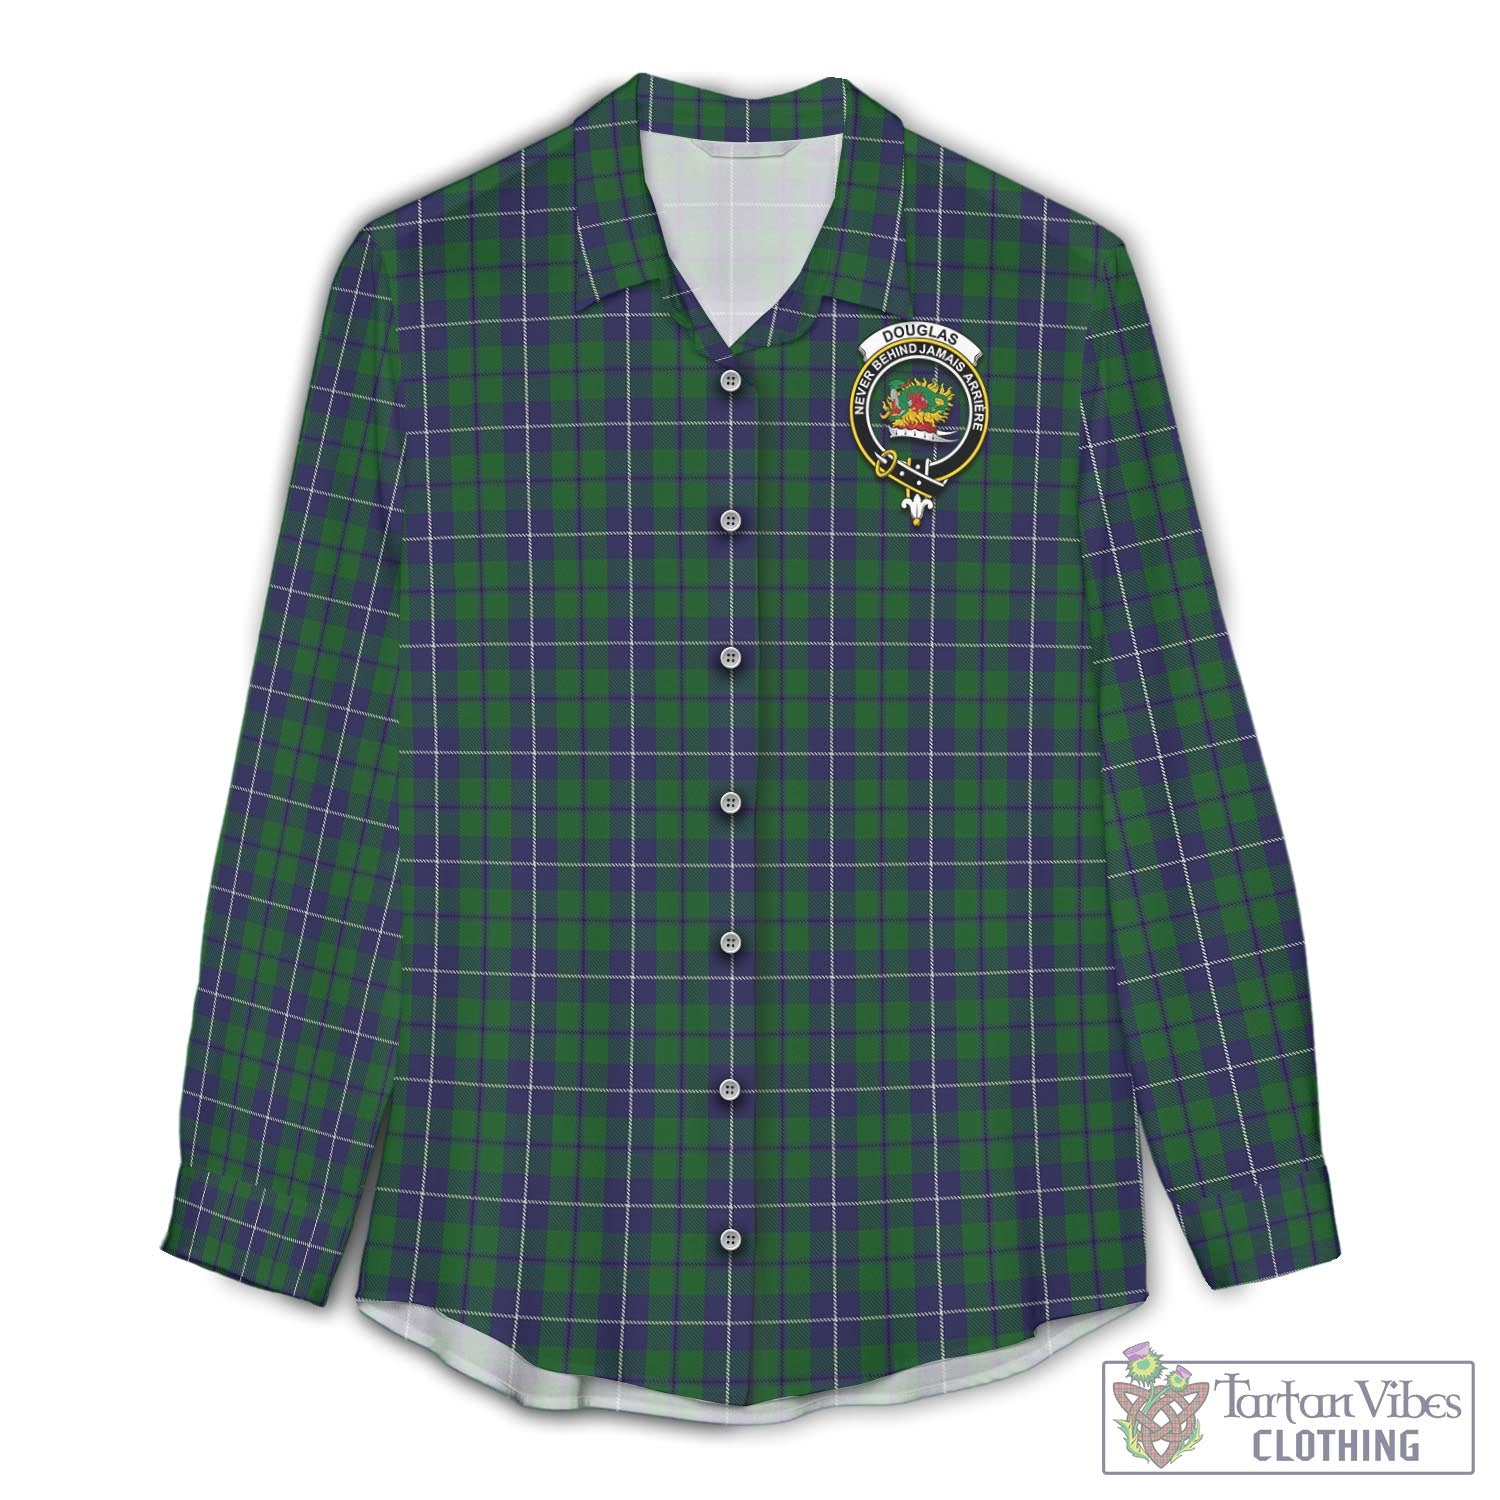 Tartan Vibes Clothing Douglas Green Tartan Womens Casual Shirt with Family Crest